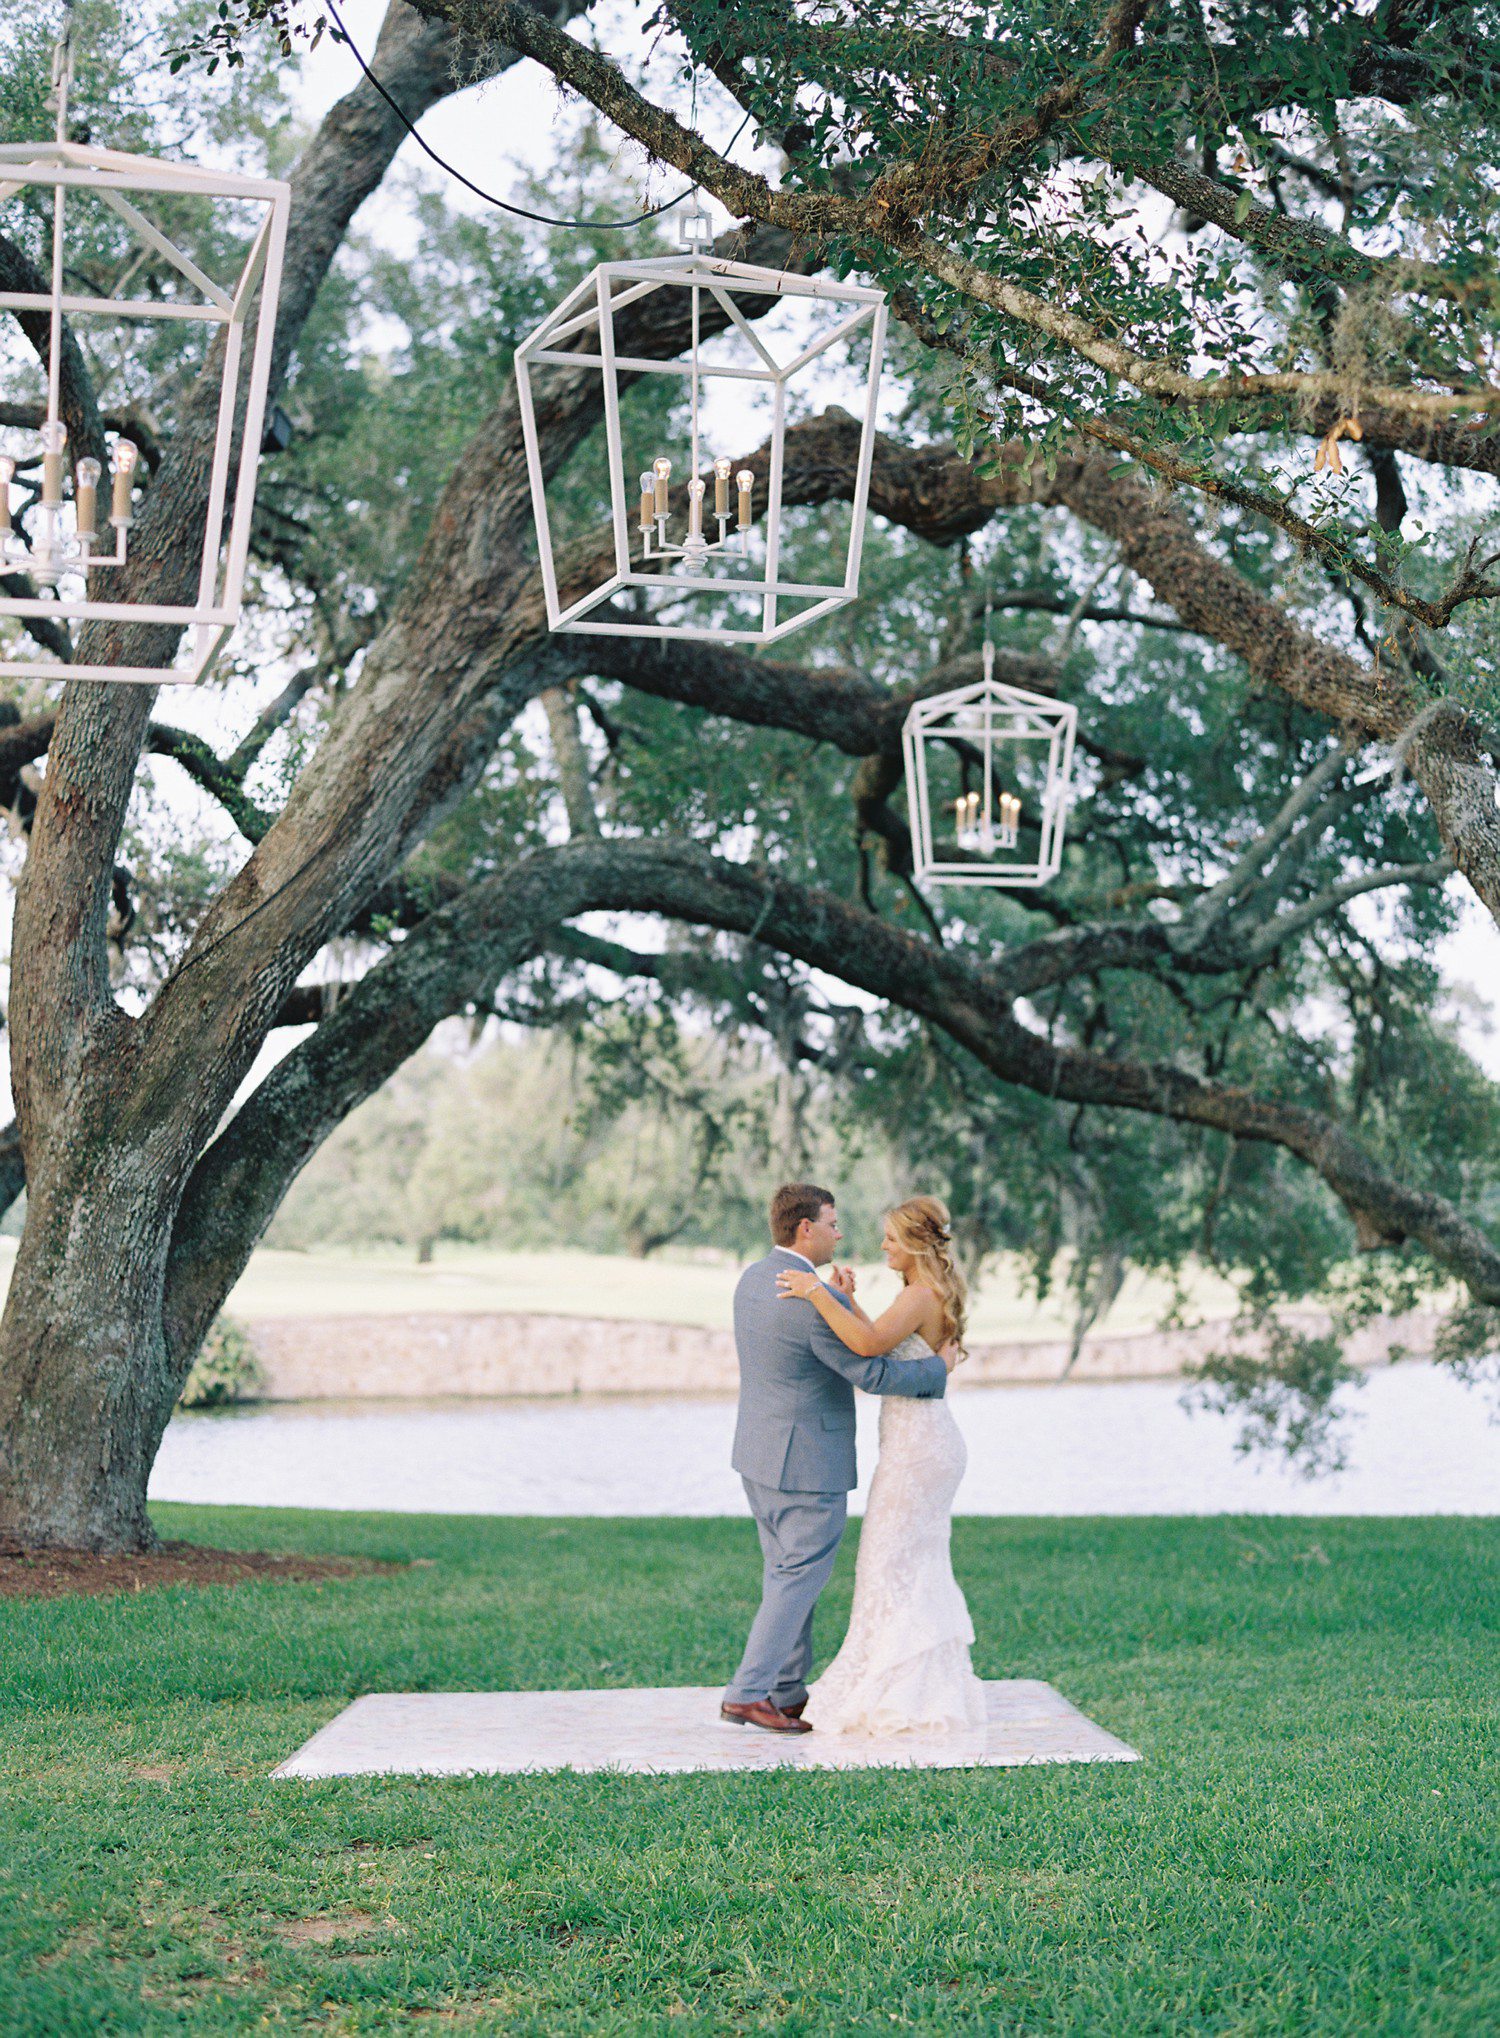 Wedding first dance under oak trees. 